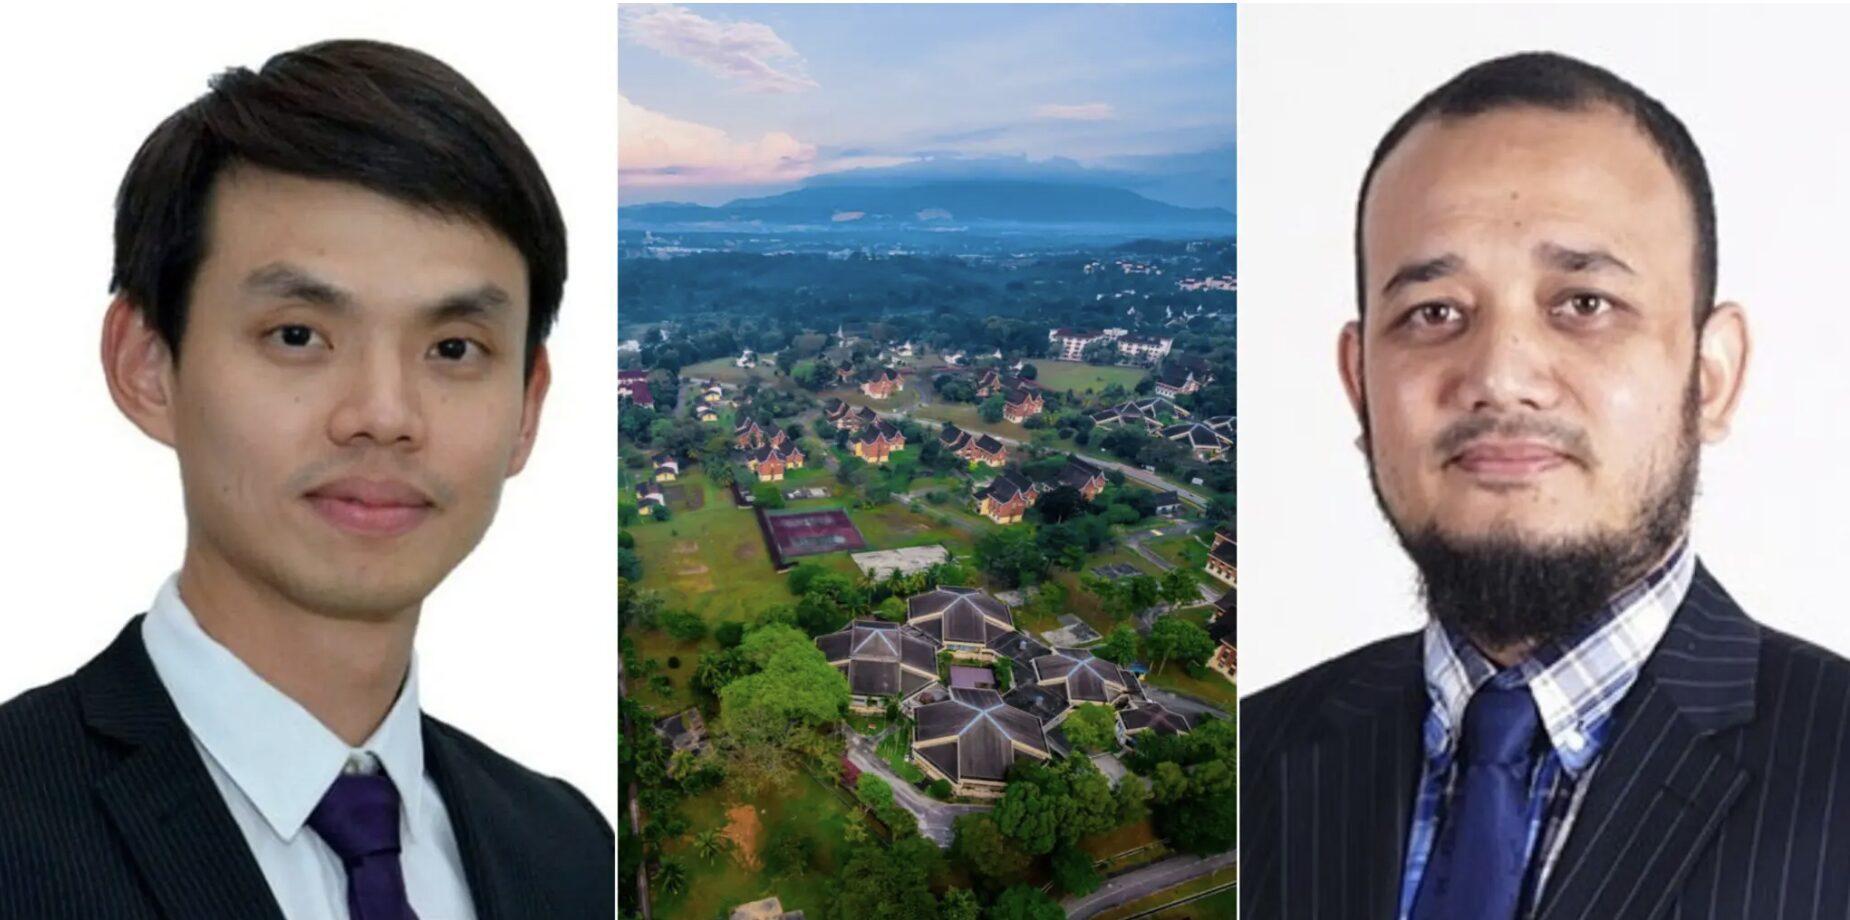 TWO UNIVERSITI TEKNOLOGI MALAYSIA RESEARCHERS AWARDED PRESTIGIOUS HORIZON EUROPE GRANT